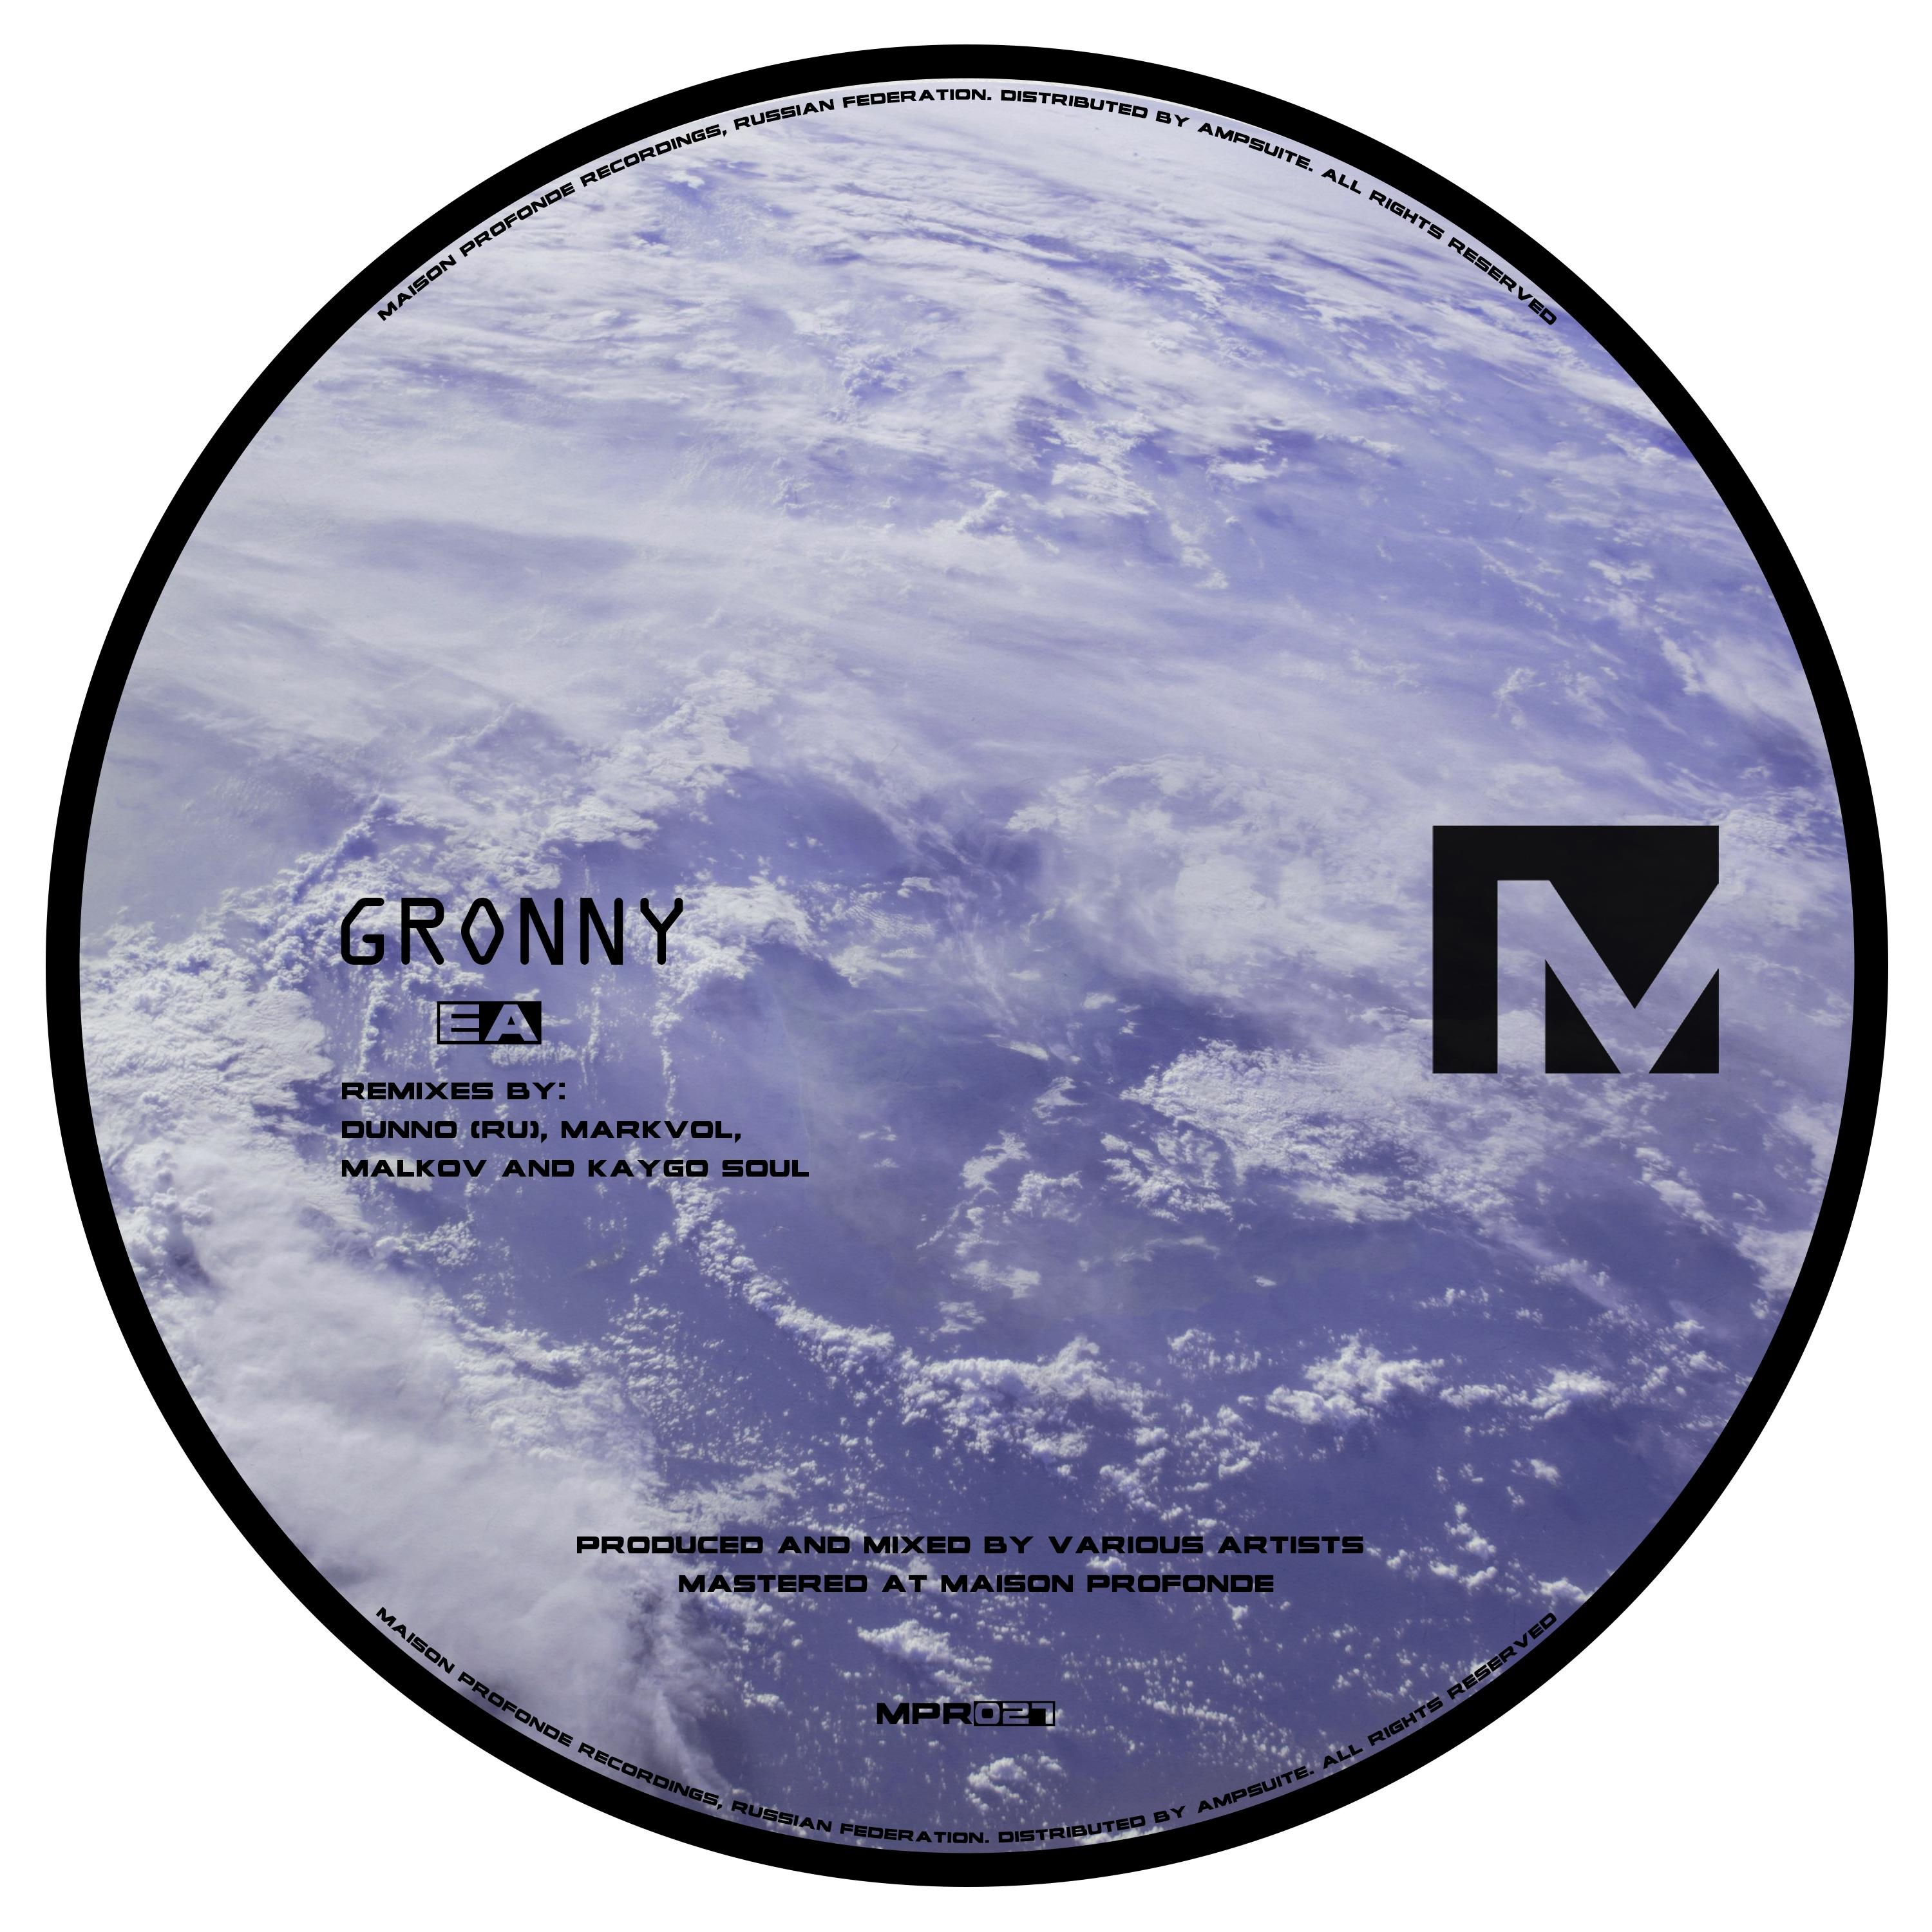 Gronny - Ea (MarkVol Remix)